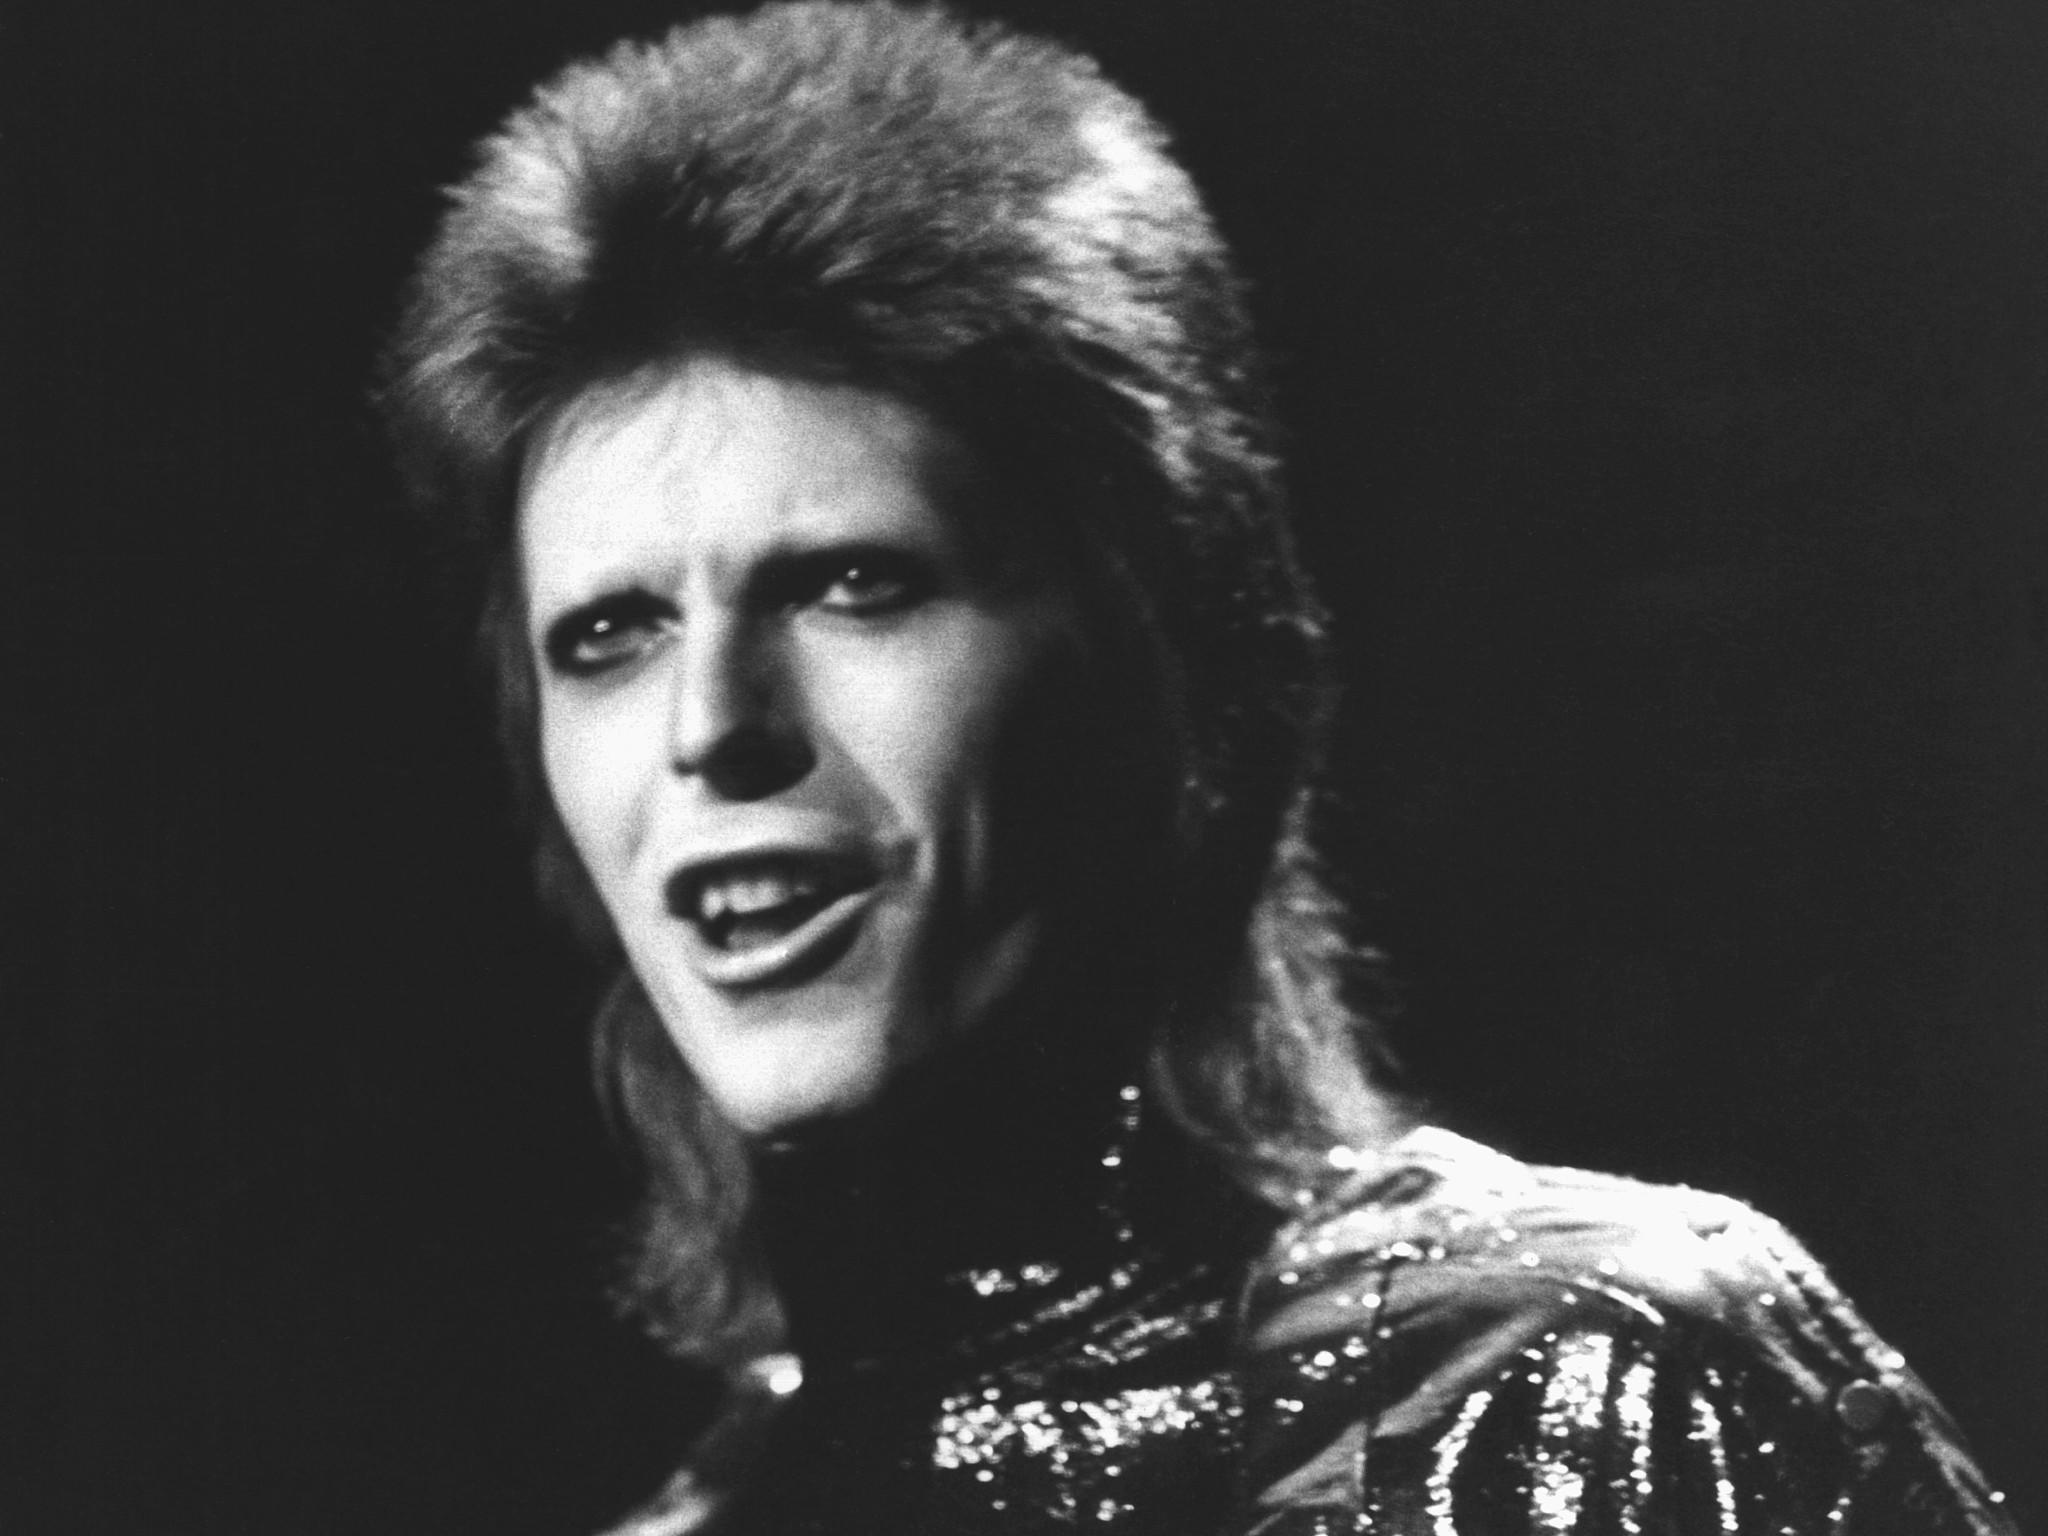 David Bowie tot gestorben Lebenswerk Galerie 